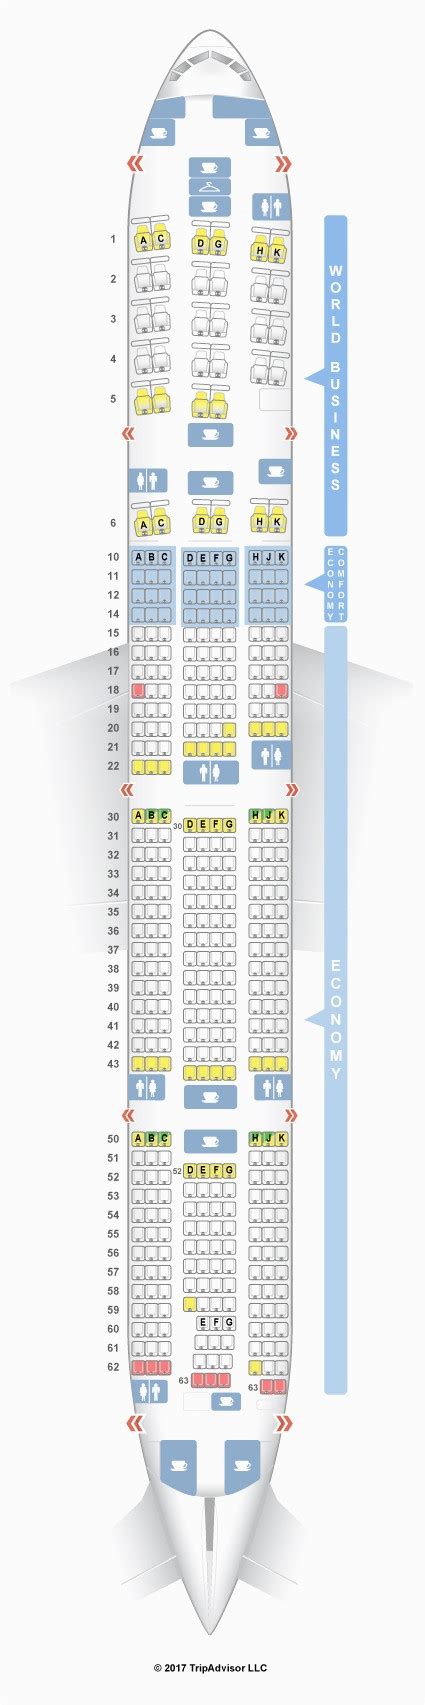 777 300er Air Canada Seat Map Aircraft 77w Seat Map Inspirational